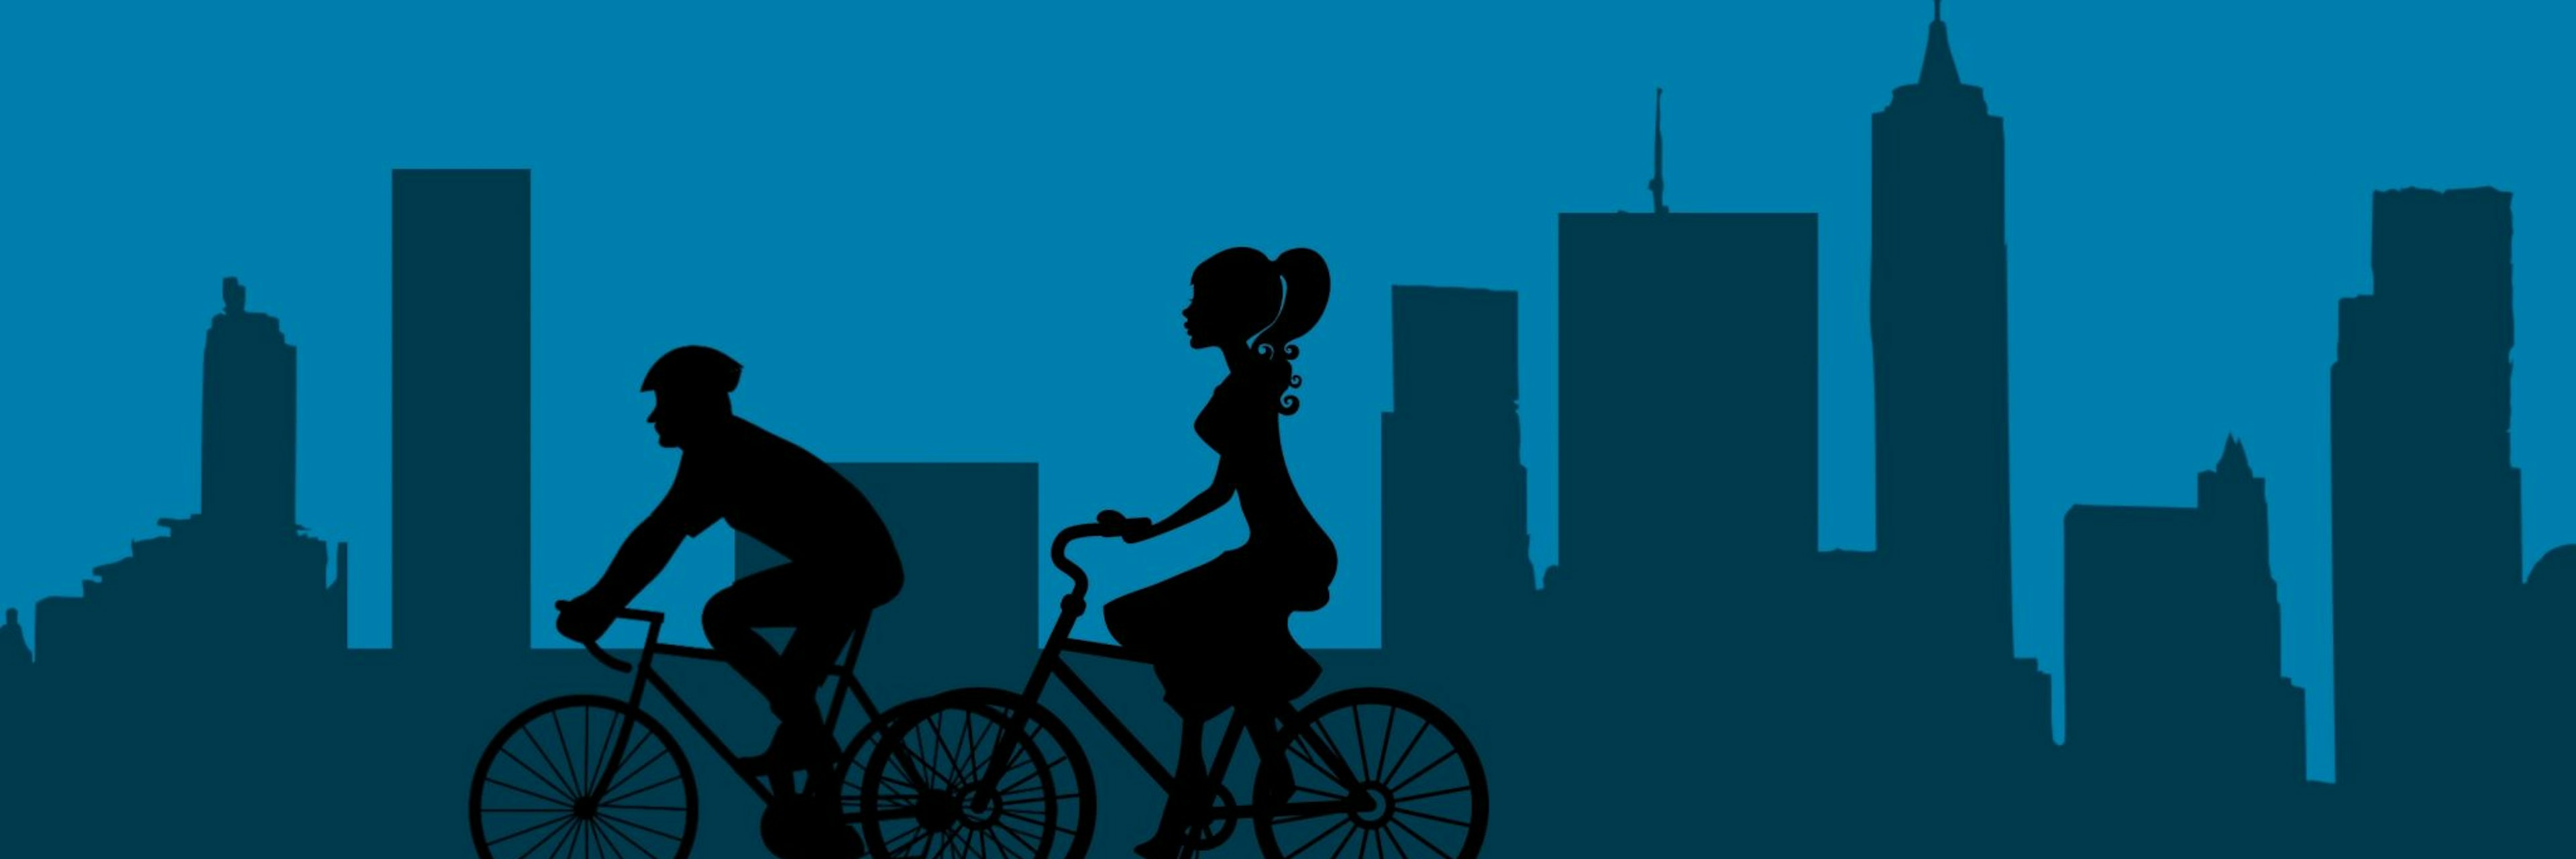 Bike riding cities